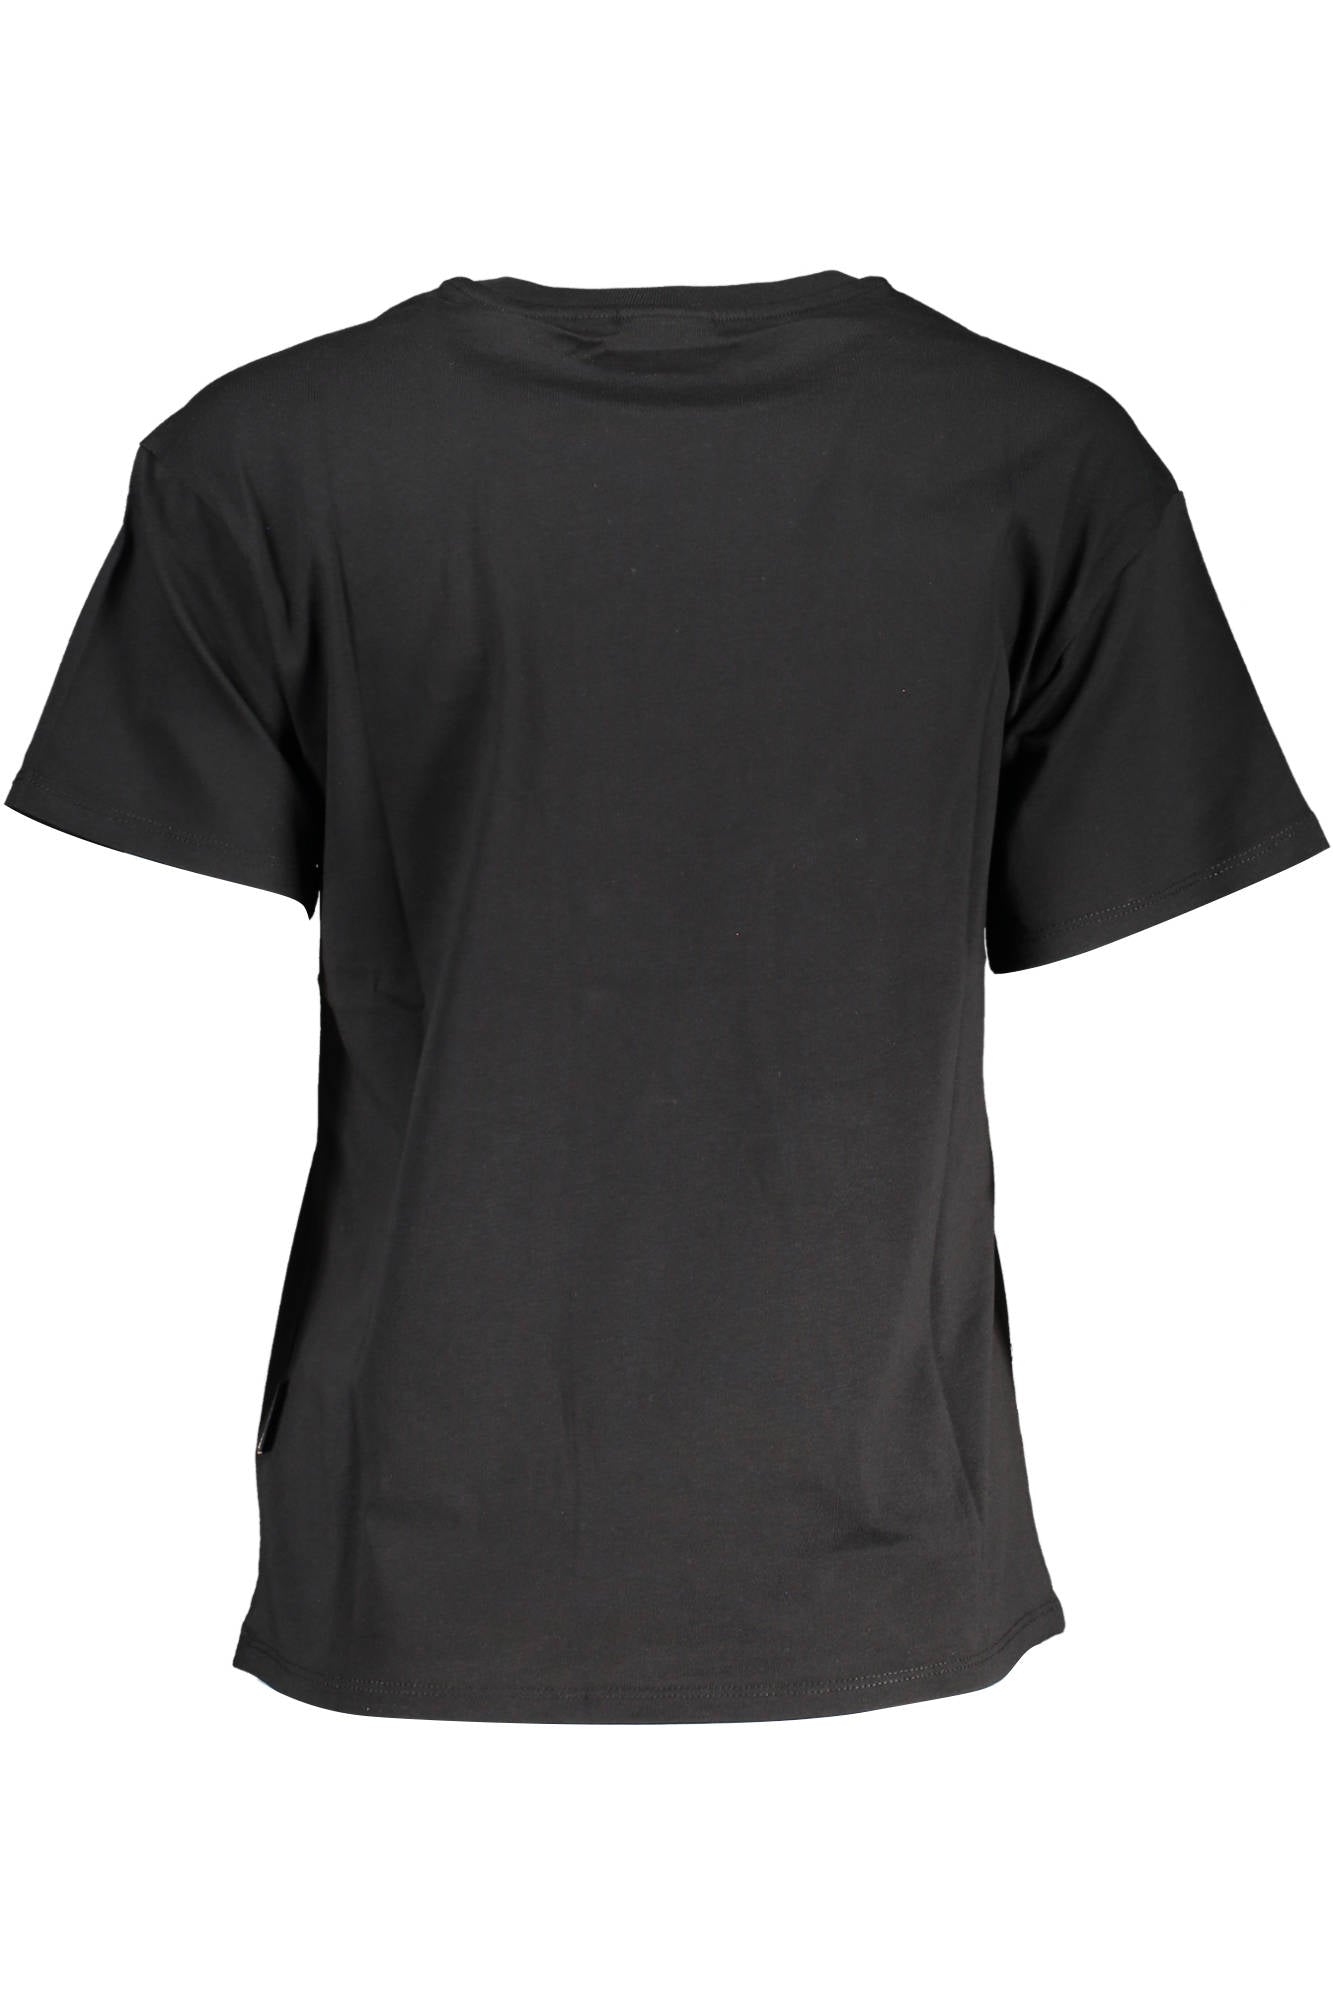 Napapijri Black Cotton Tops & T-Shirt - Fizigo